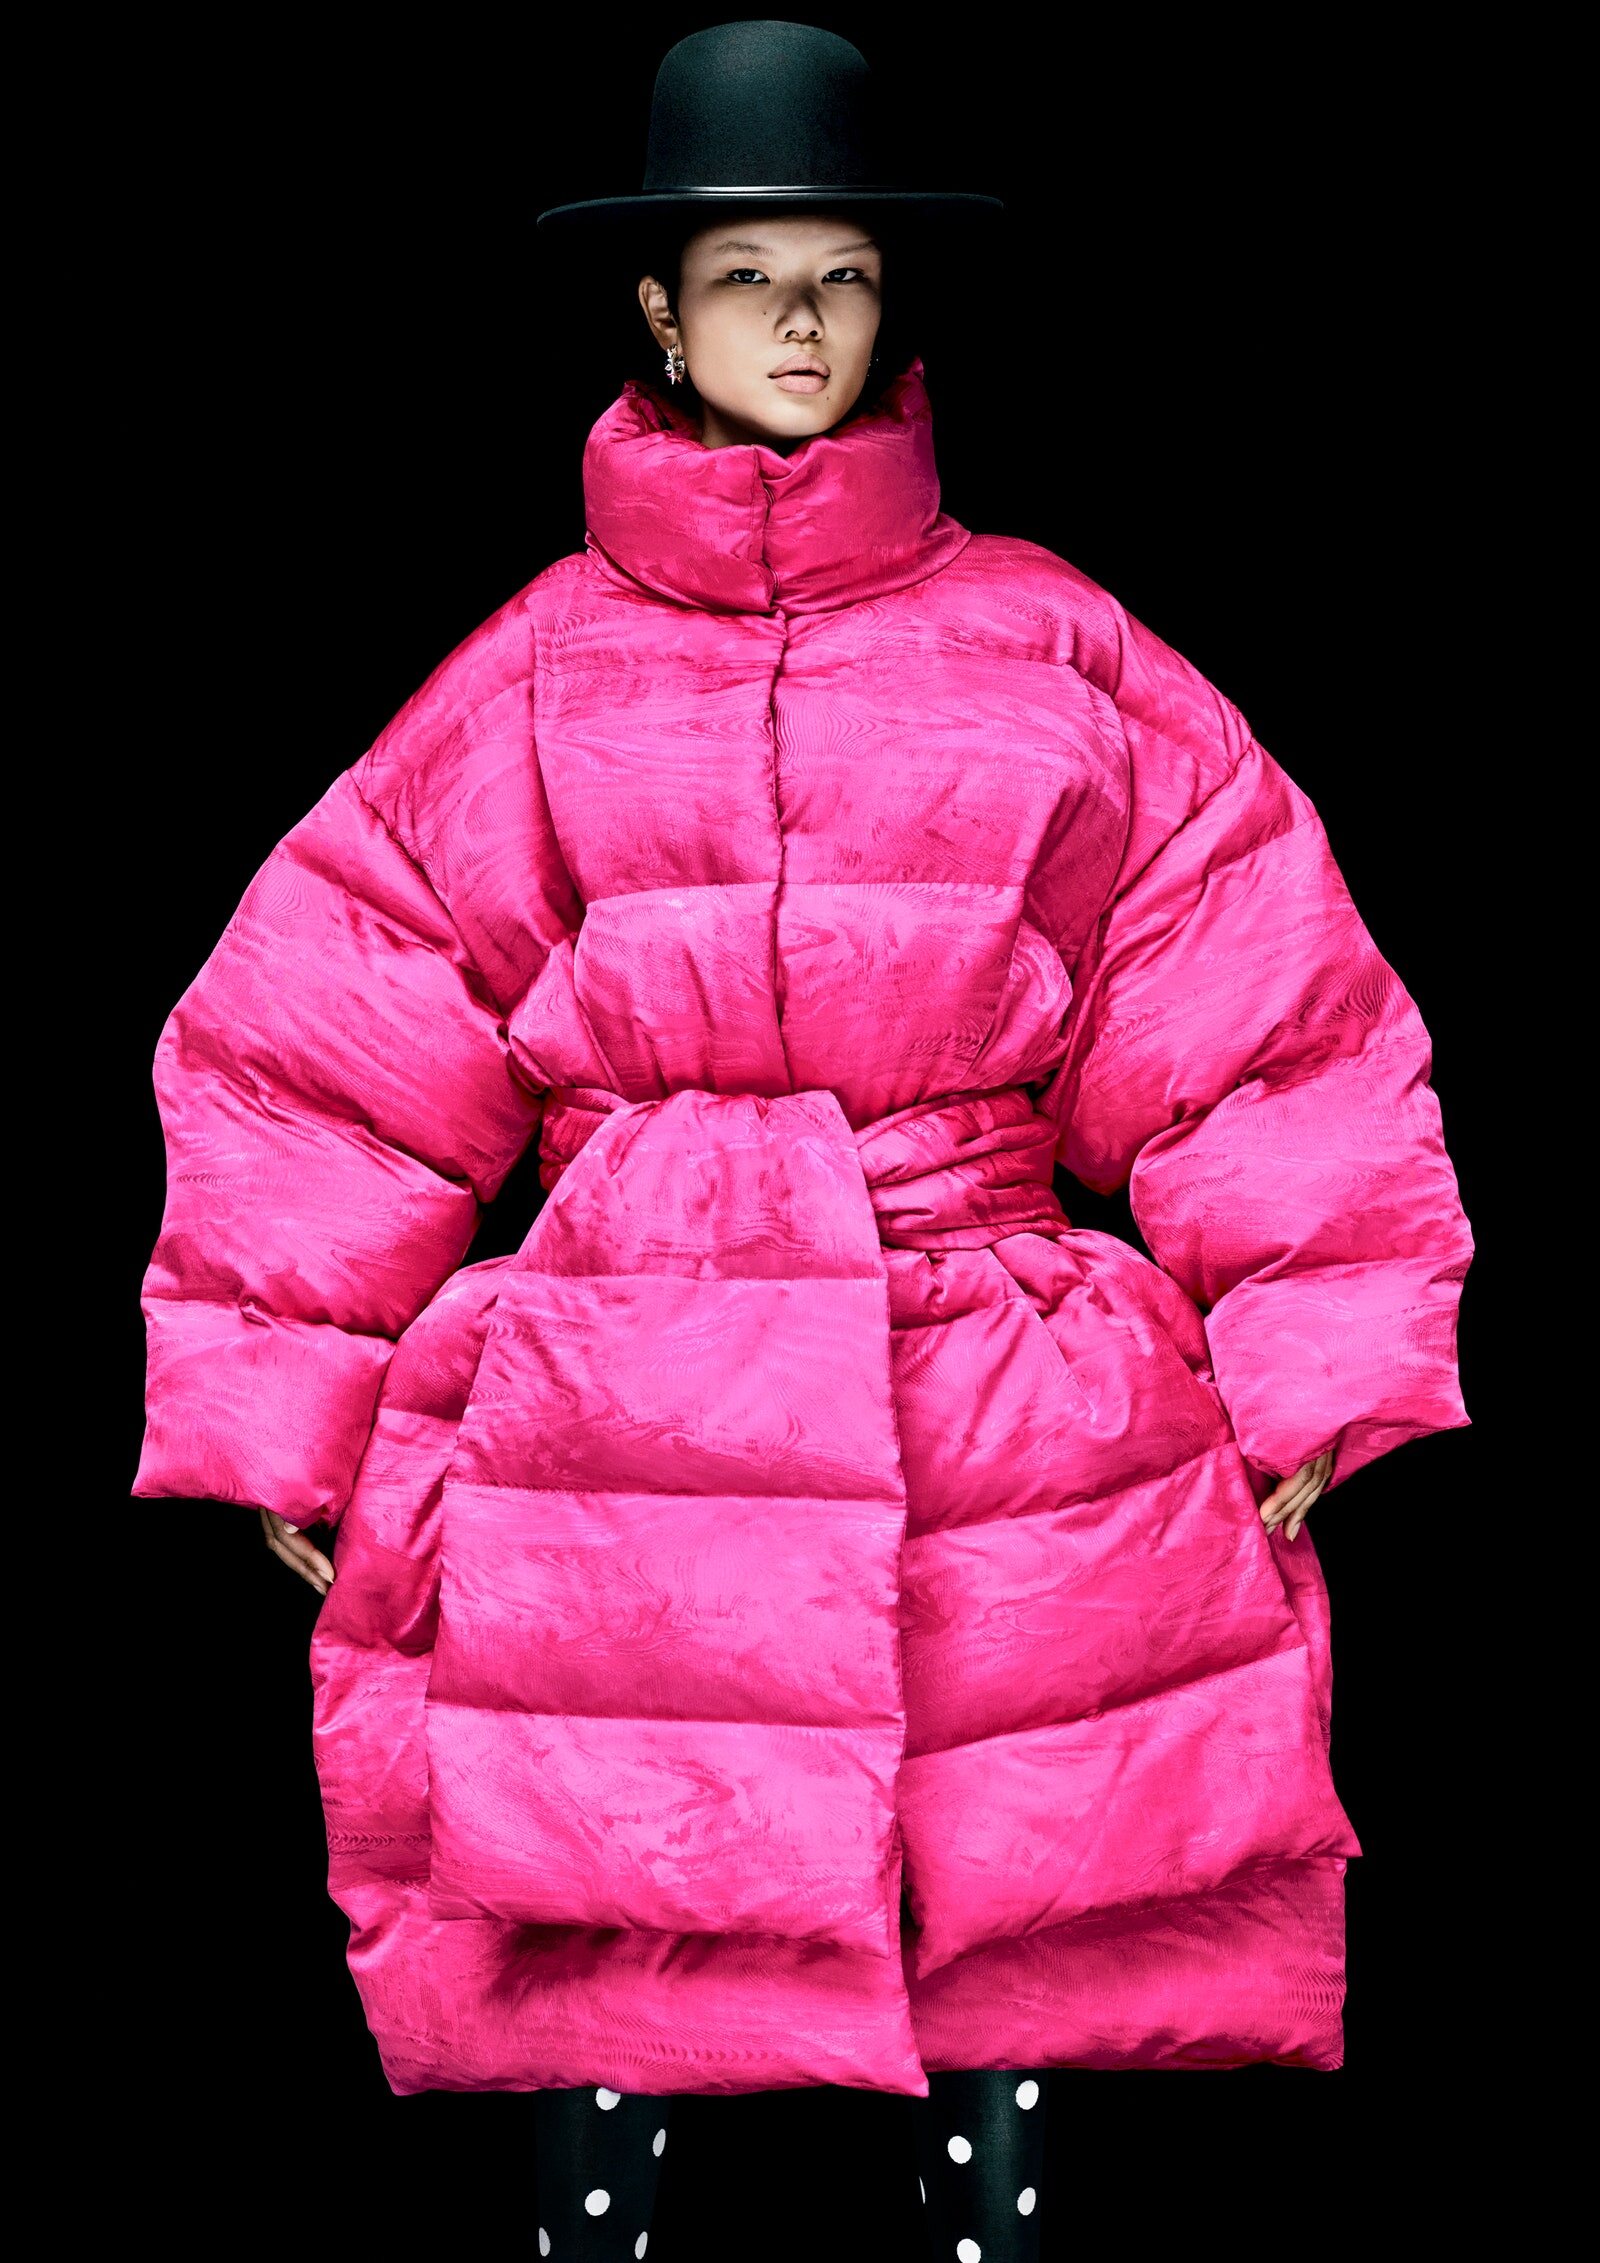 Abrigo acolchado oversize en color rosa fucsia | Foto: Cortesía de H&M